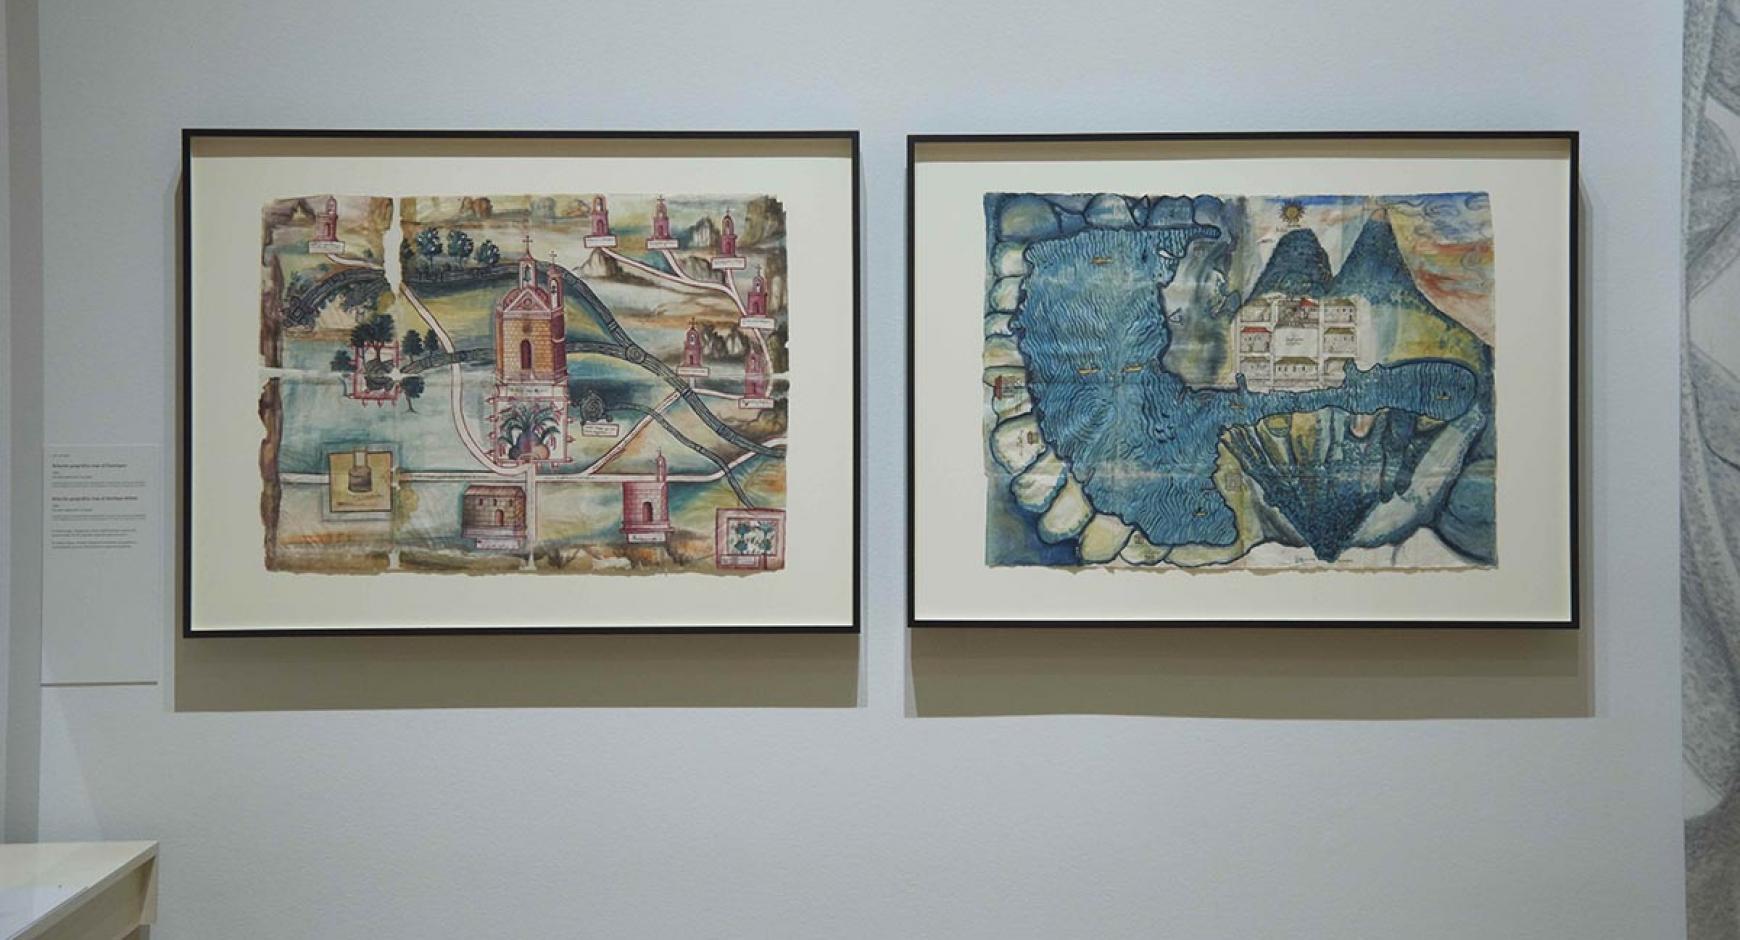 Guaxtepec (left) and Atitlan maps at the Huntington.